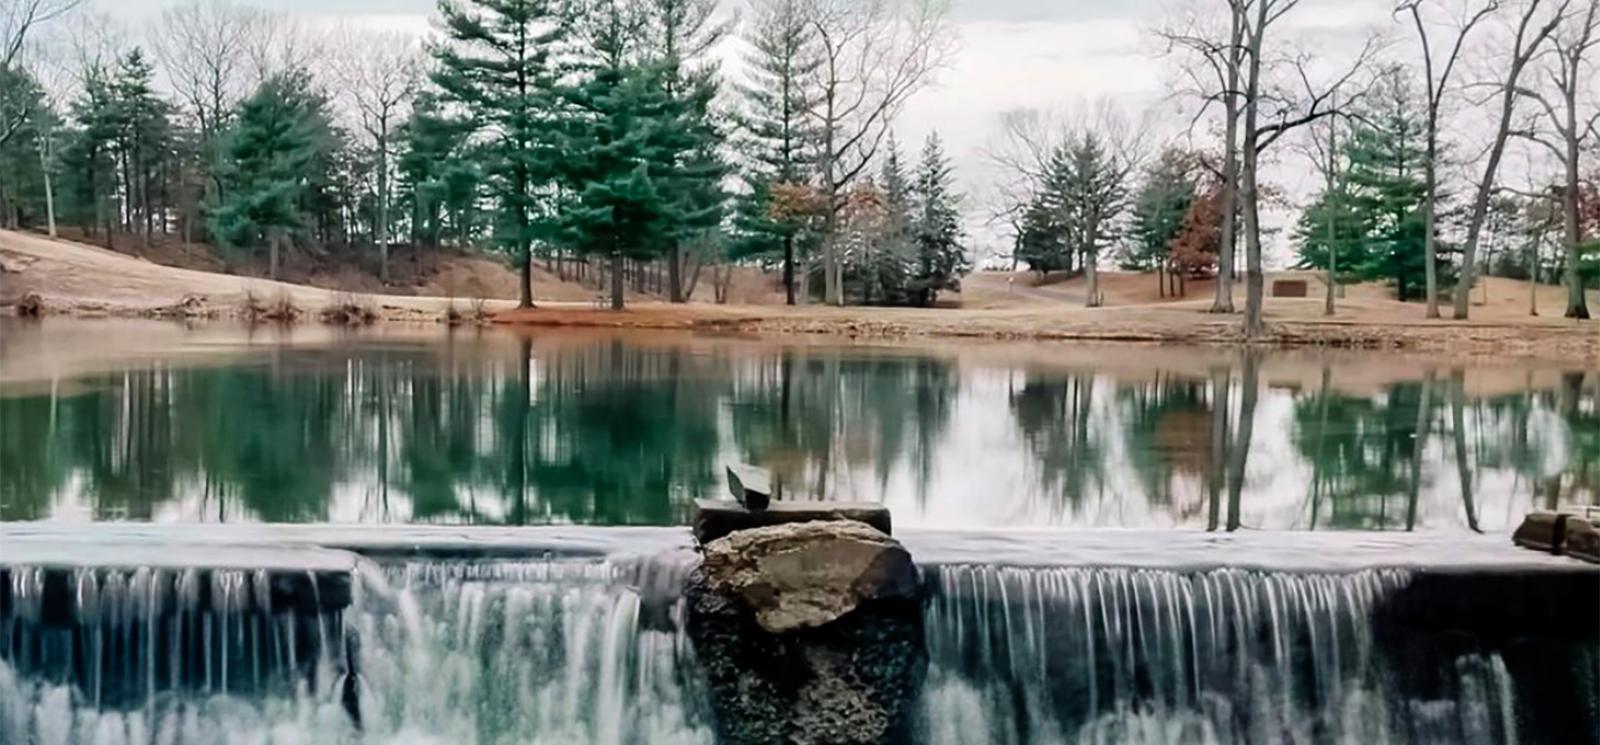 Falls at Wharton Brook (Instagram@coolauntaesthetic)